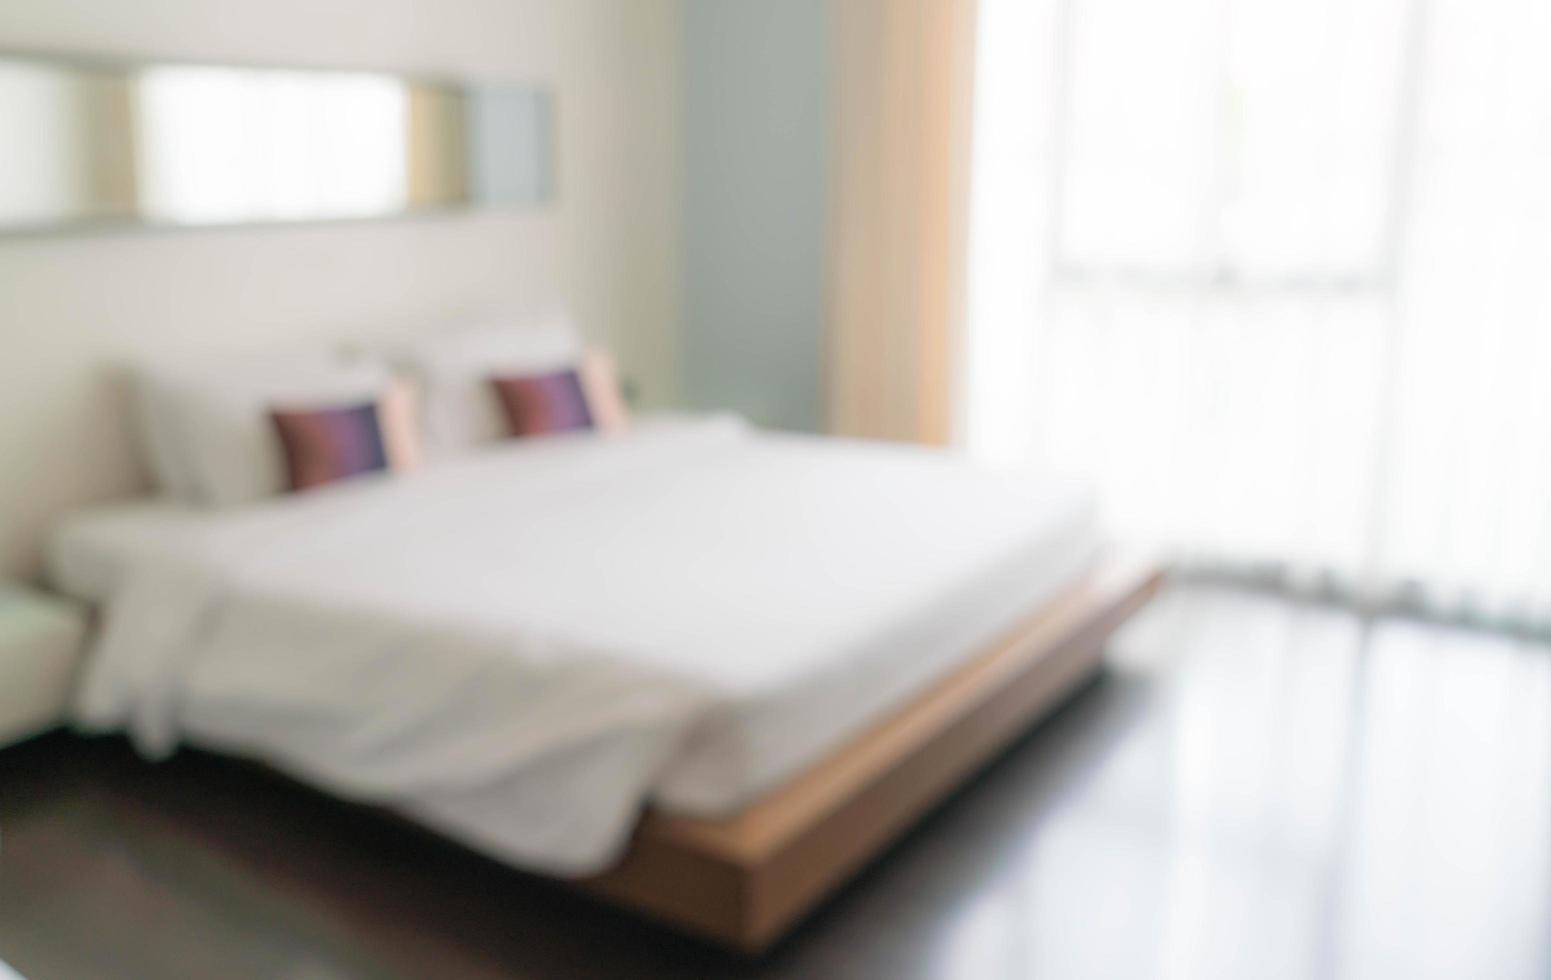 Abstract blur beautiful luxury bedroom interior photo